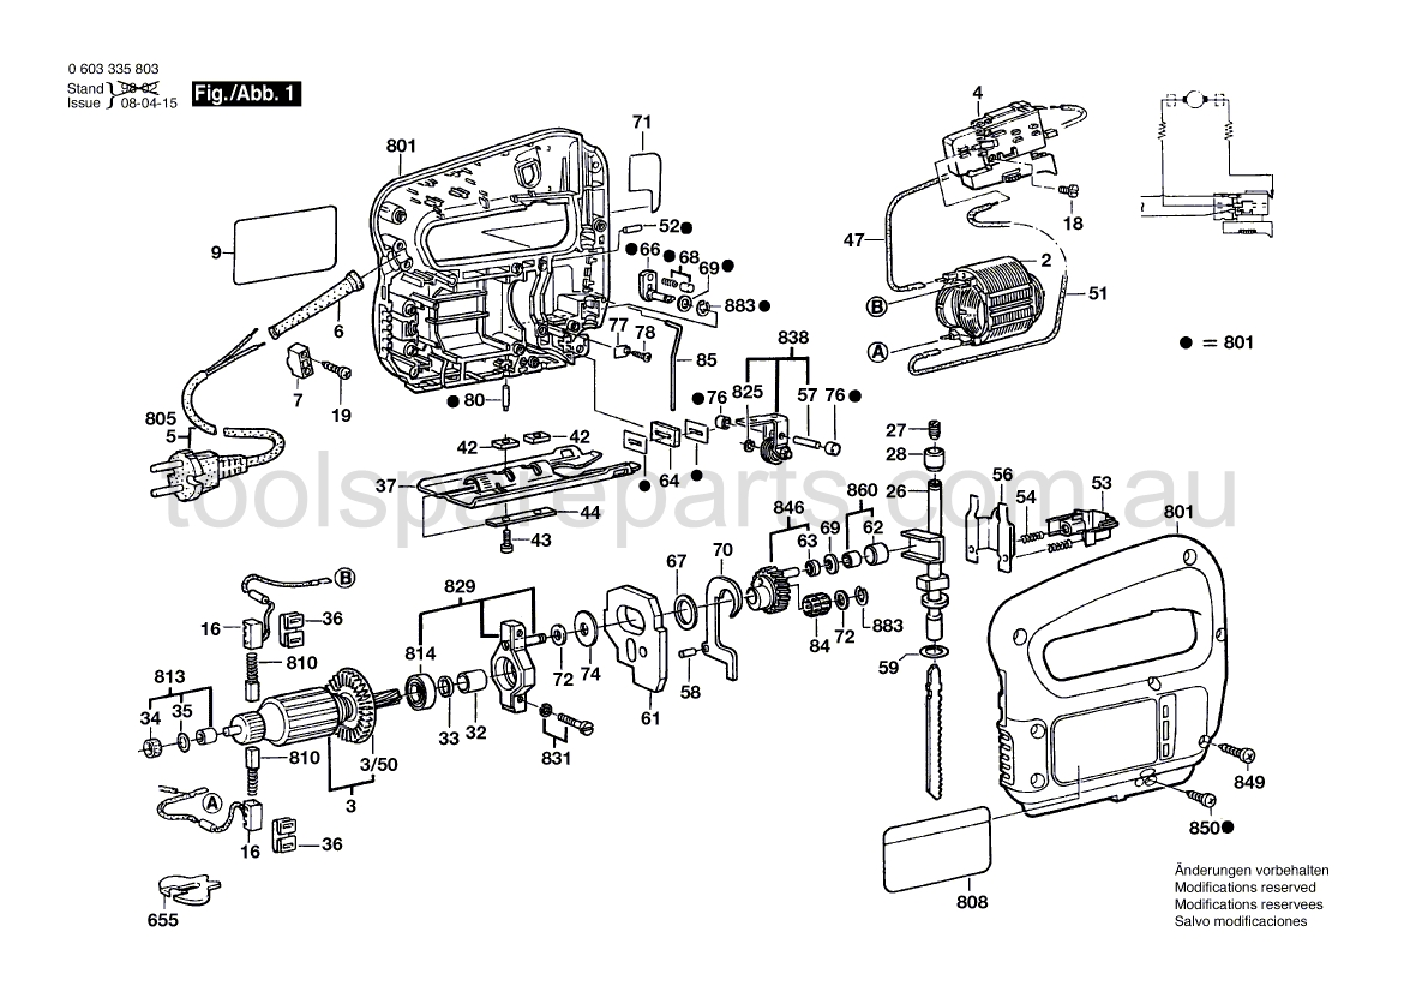 Bosch PST 65 PE 0603335837  Diagram 1